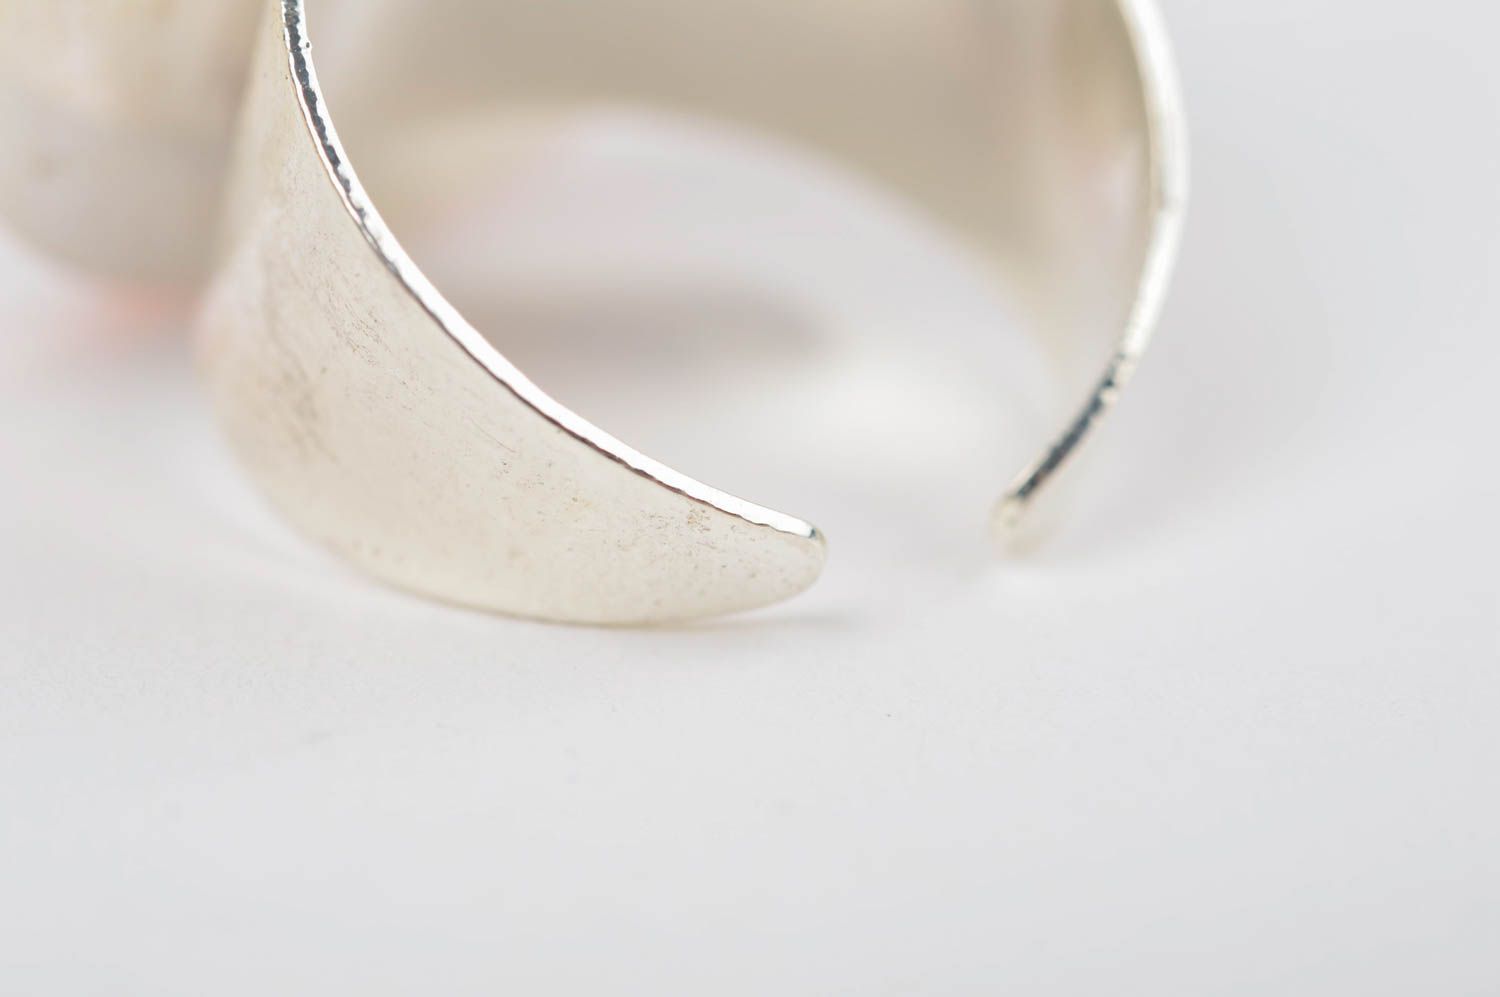 Beautiful handmade glass ring design artisan jewelry glass art gifts for her photo 4